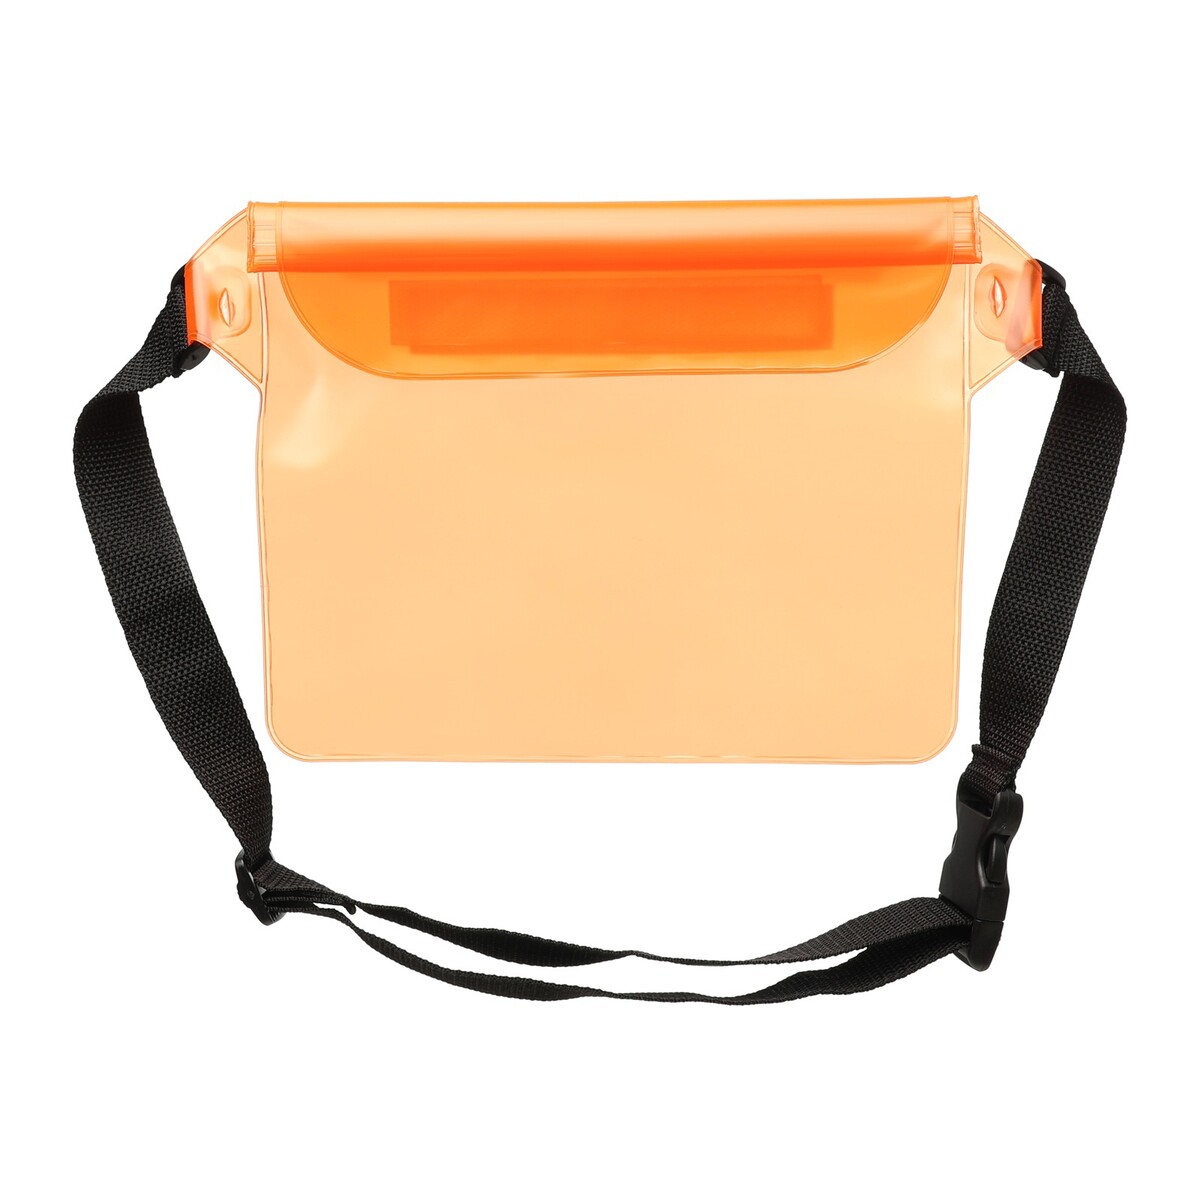 Сумка поясная, водонепроницаемая, оранжевая, 22 х 18 см сумка поясная водонепроницаемая черная 22 х 18 см